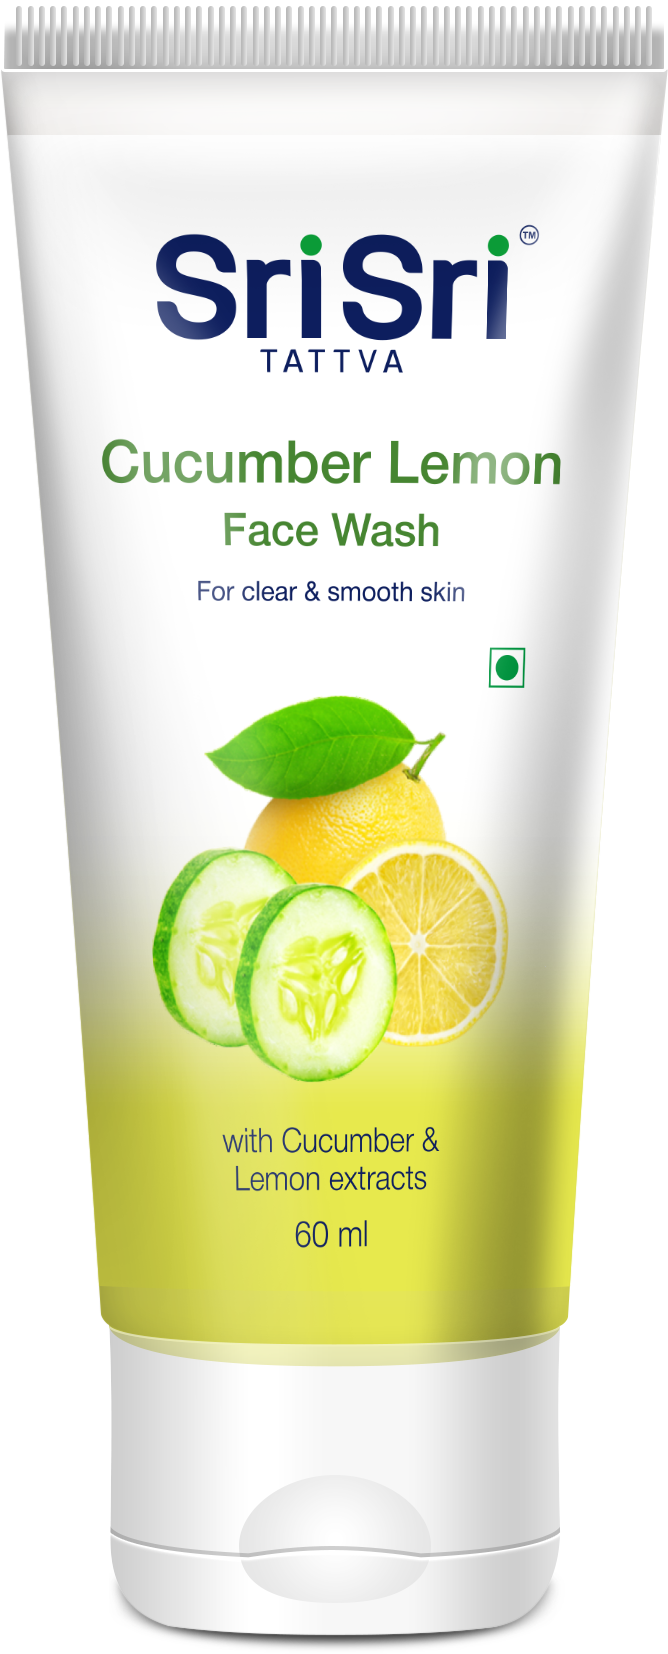 Buy Sri Sri Tattva Cucumber Lemon Face Wash at Best Price Online